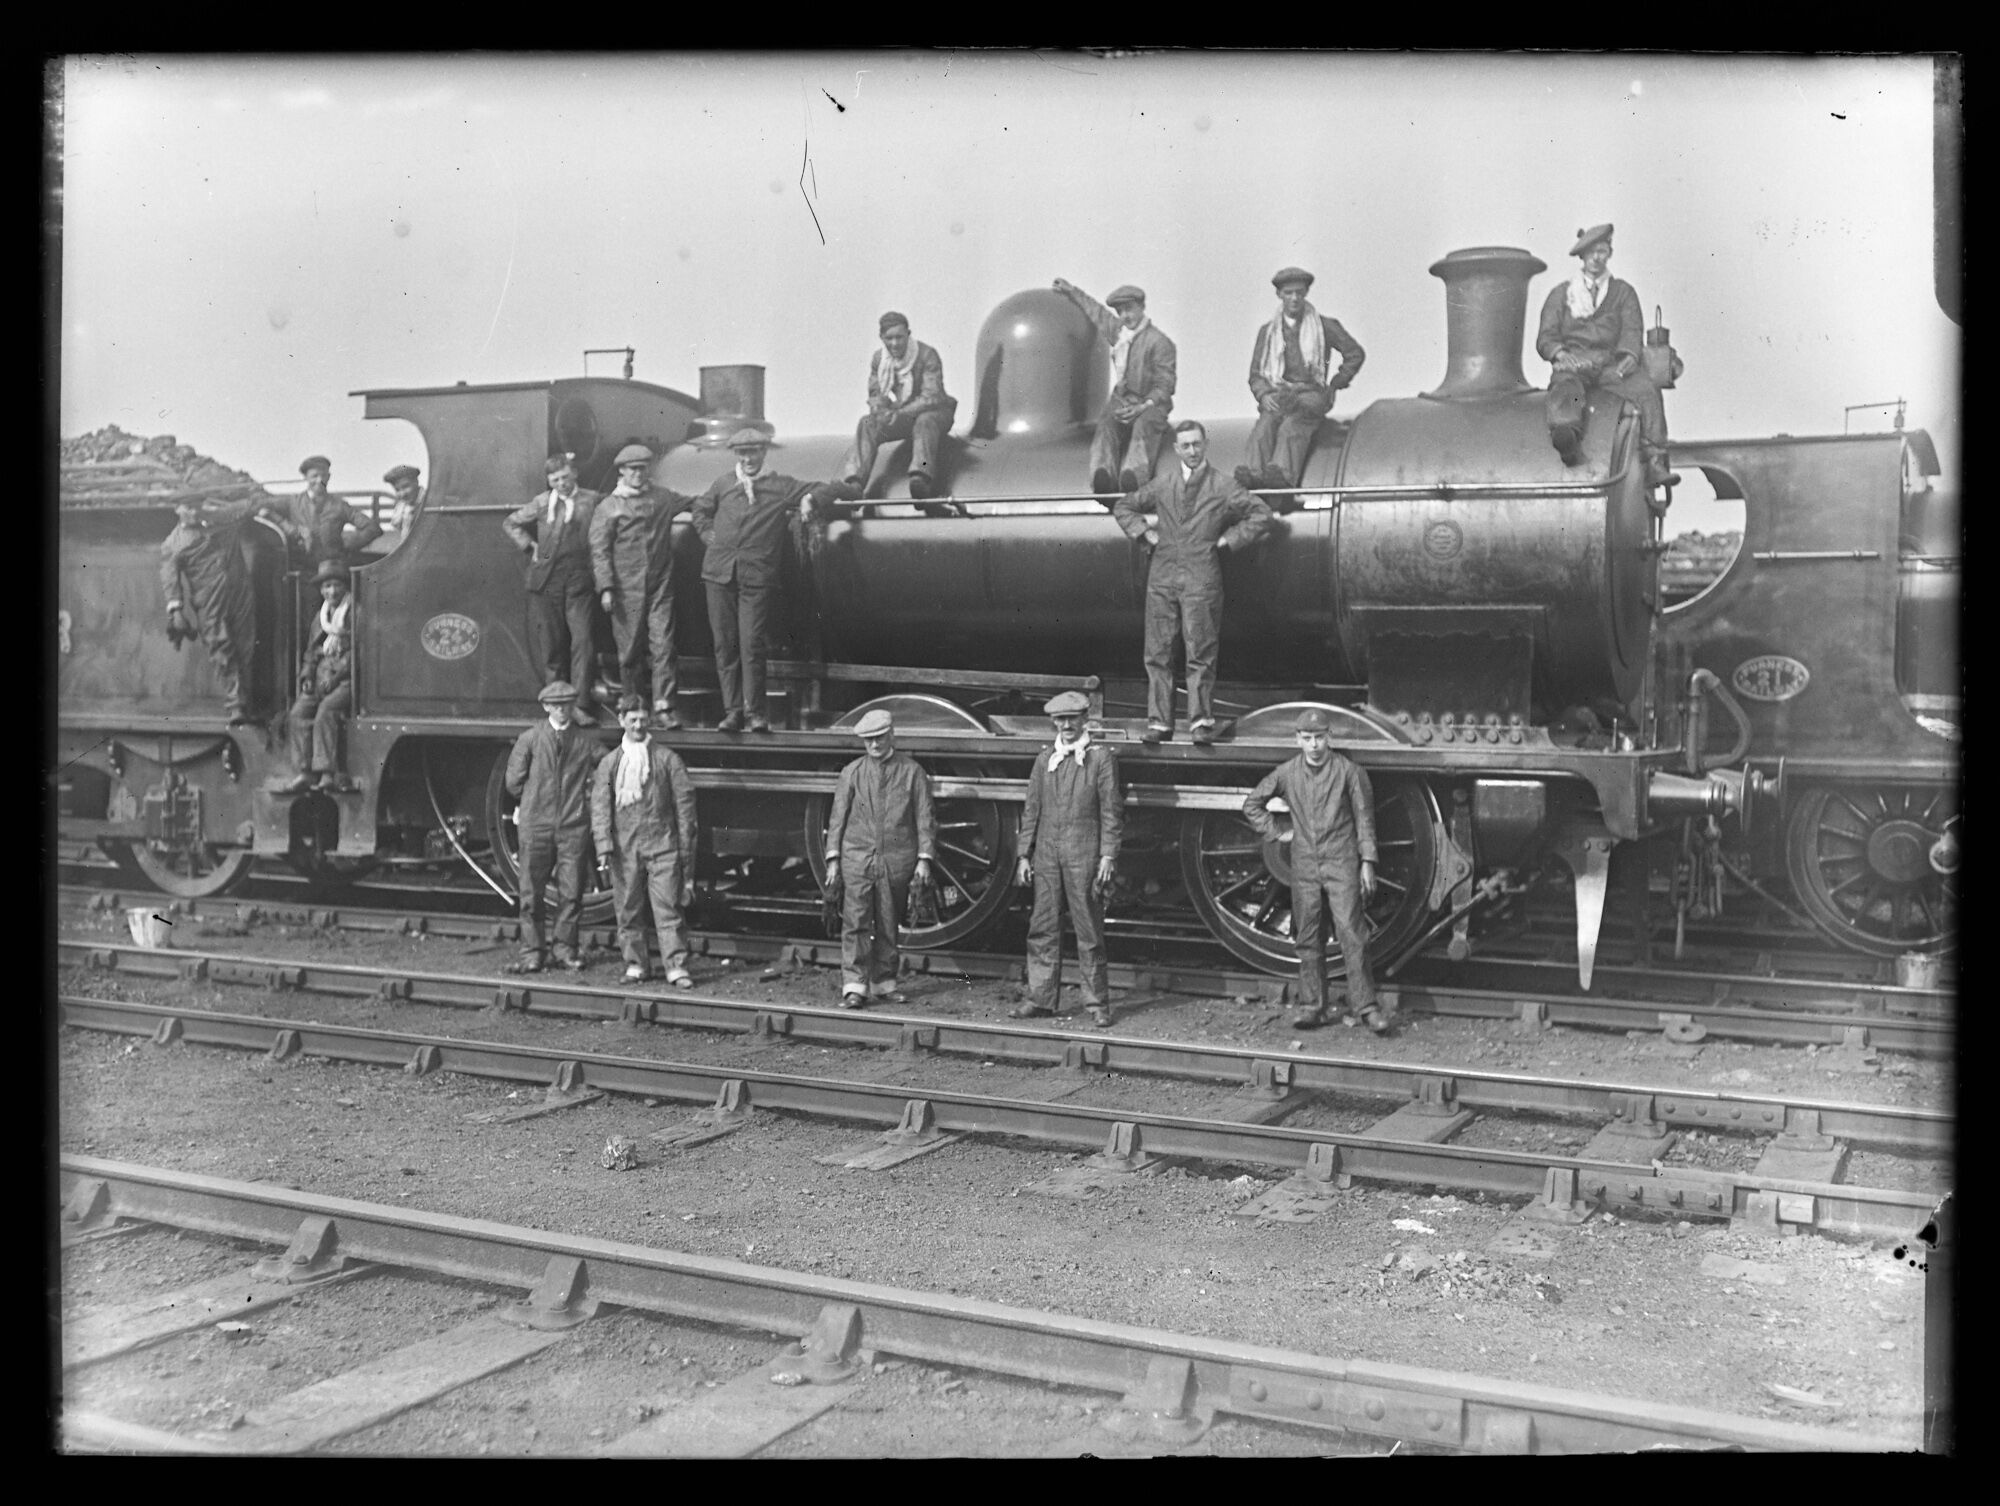 Furness Railway locomotive No. 24 at Barrow Sheds, Barrow-in-Furness